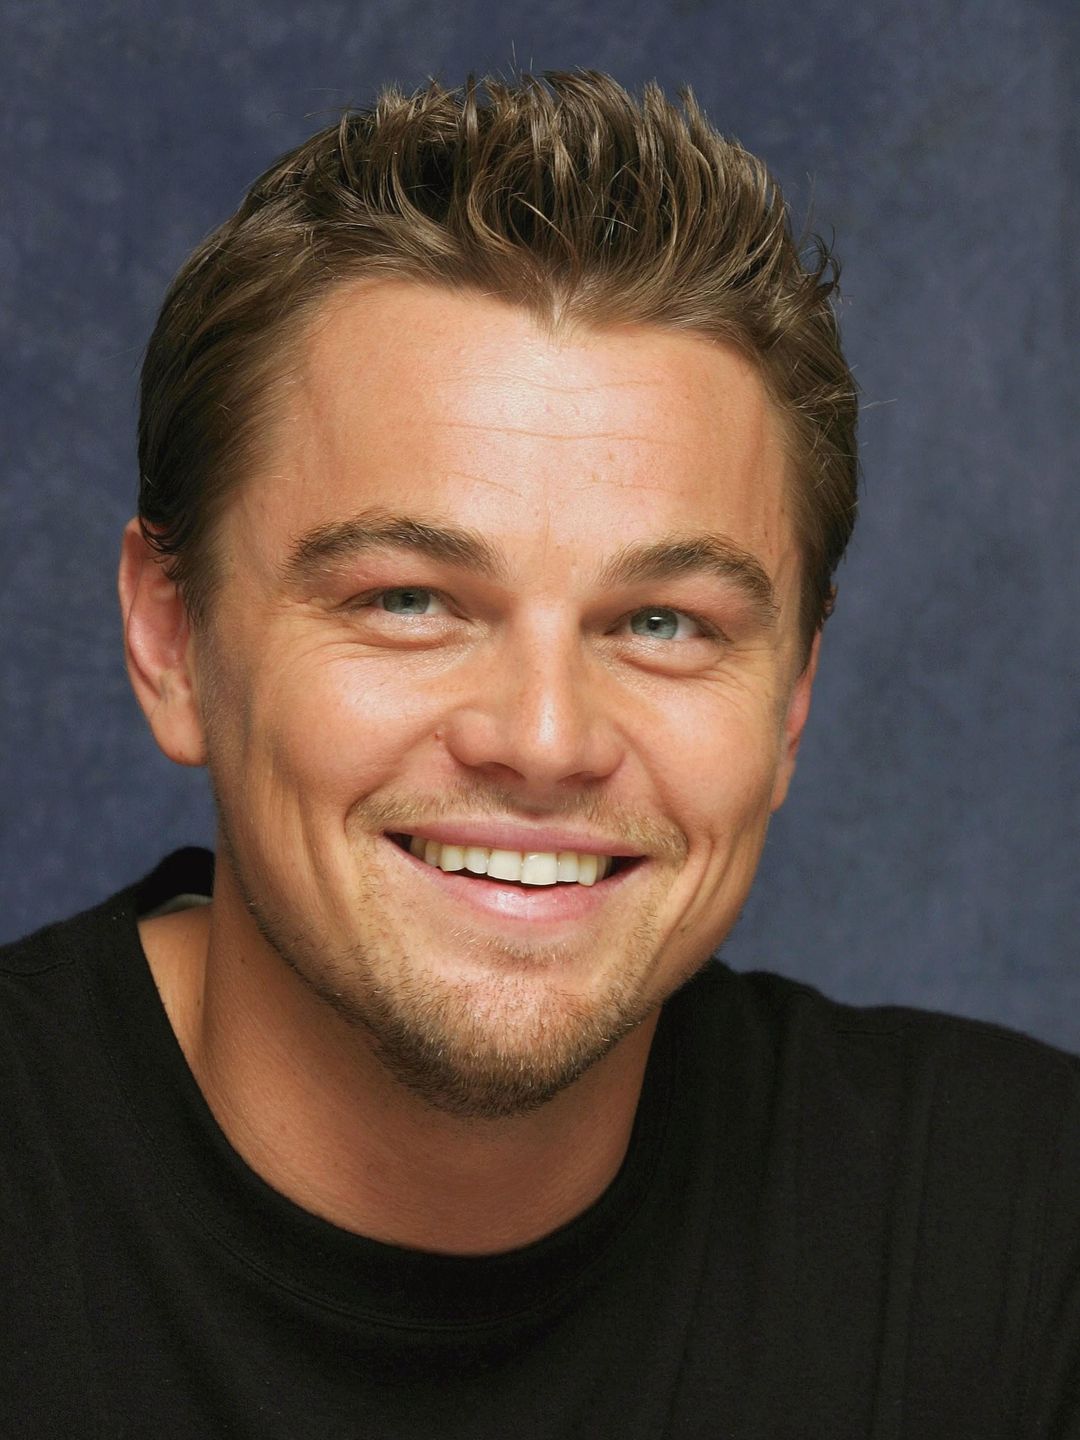 Leonardo DiCaprio in his youth